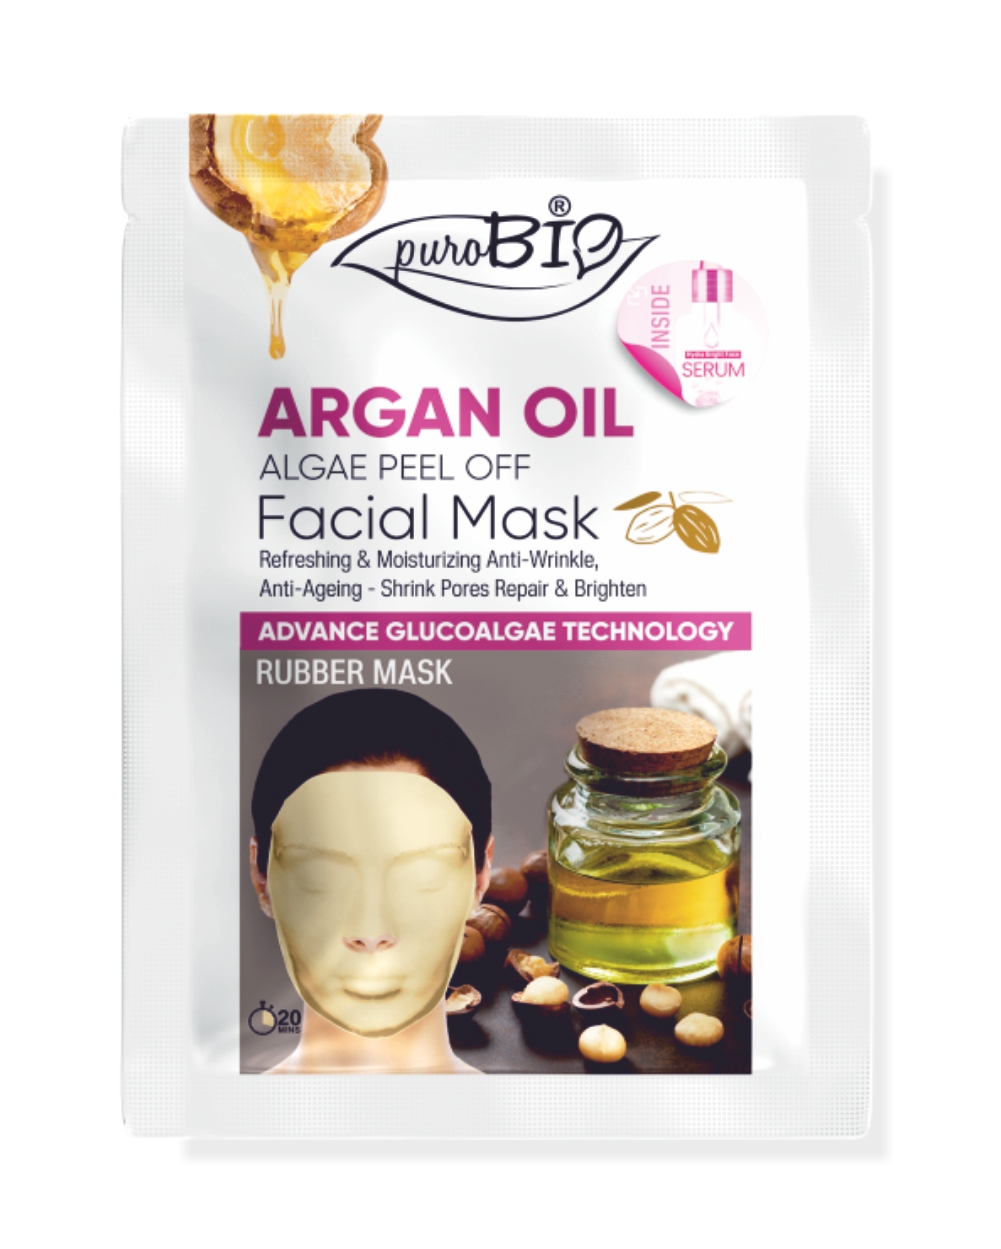 Argan Oil Face mask